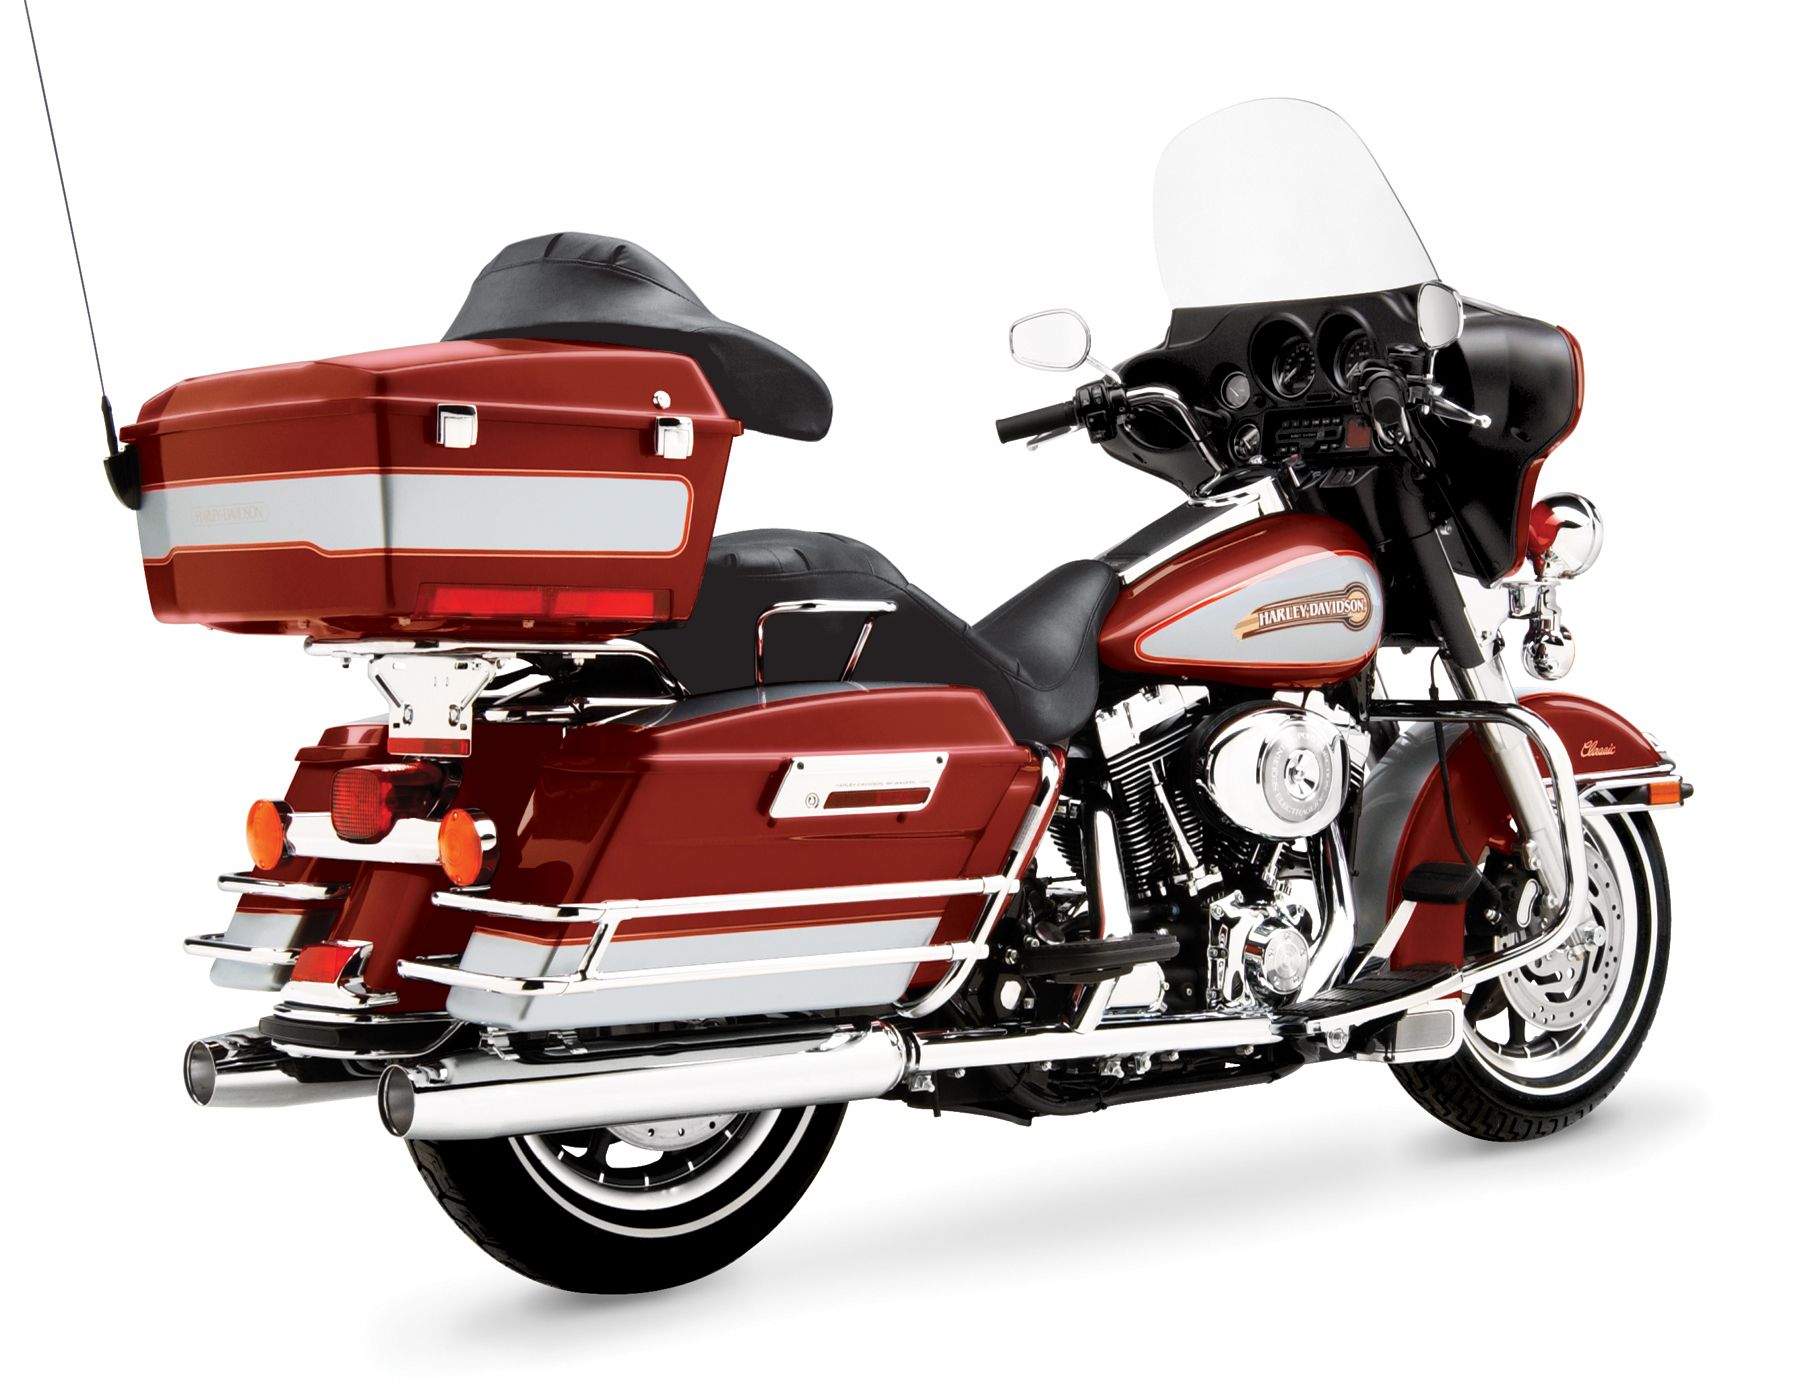 2006 Harley-Davidson FLHTC/I Electra Glide Classic